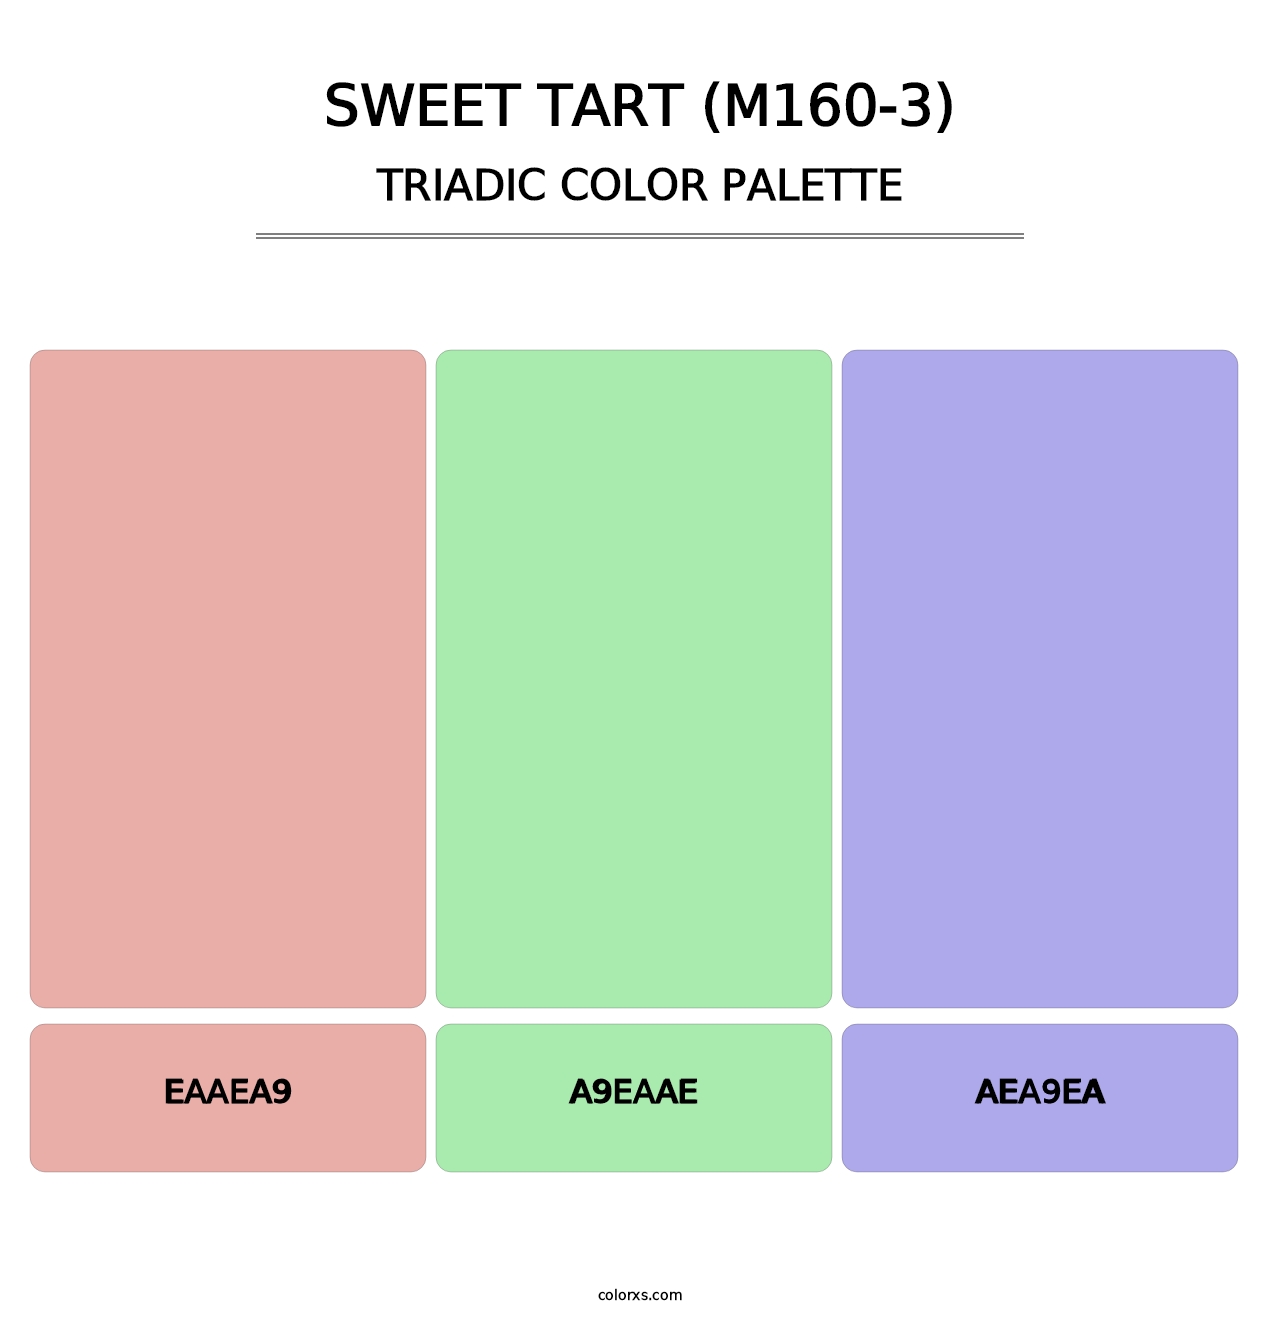 Sweet Tart (M160-3) - Triadic Color Palette